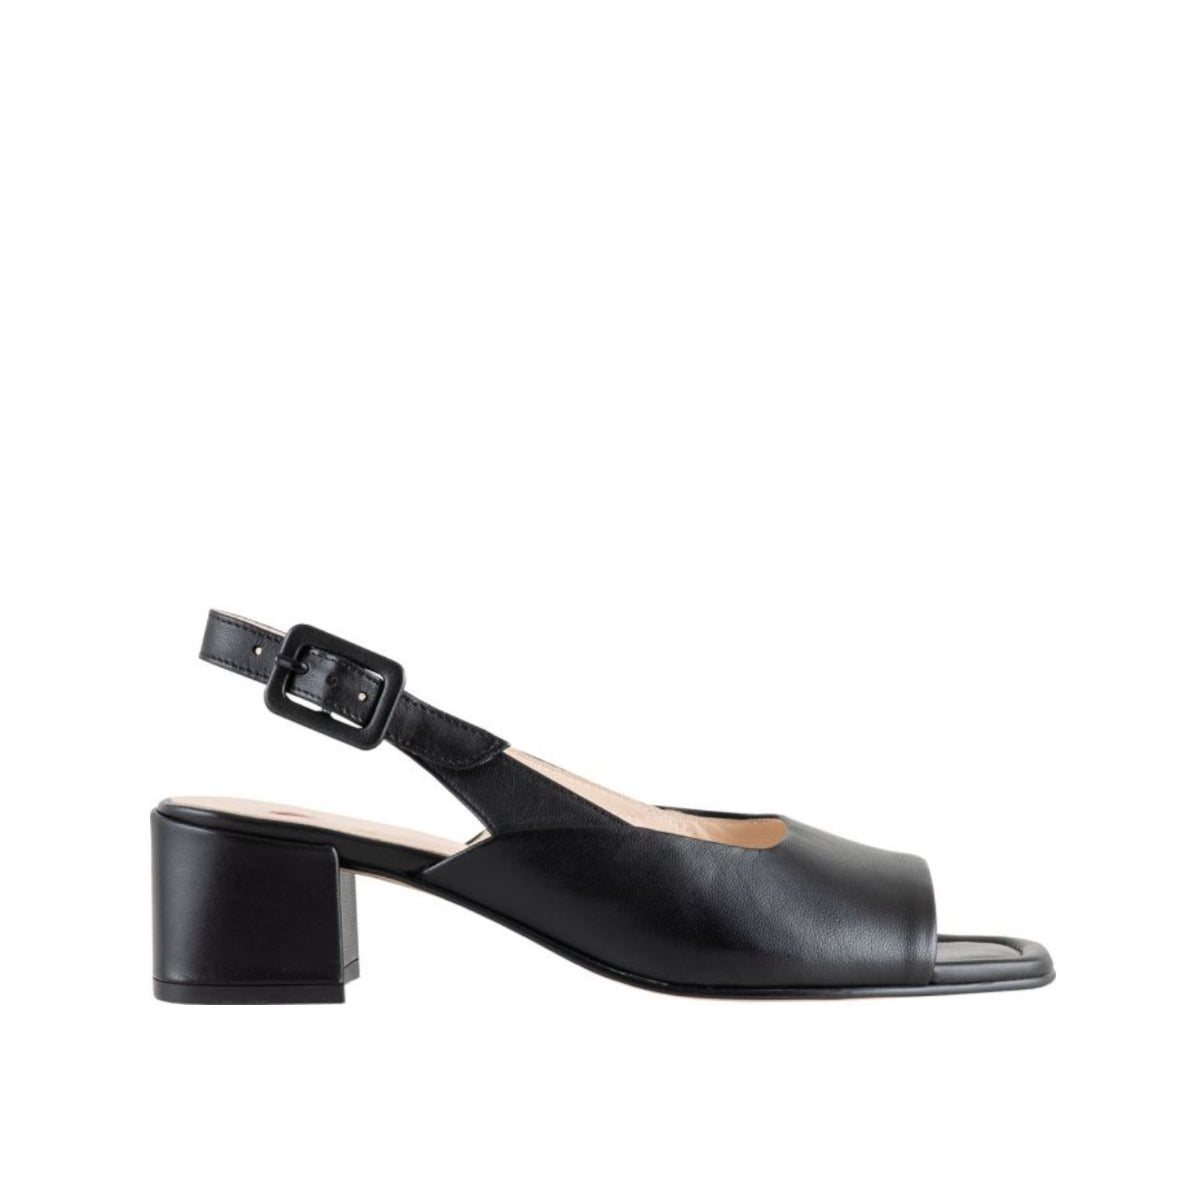 1035 00 - shoe&me - Hogl - Sandal - Heels, Sandal, Summer 2021, Womens